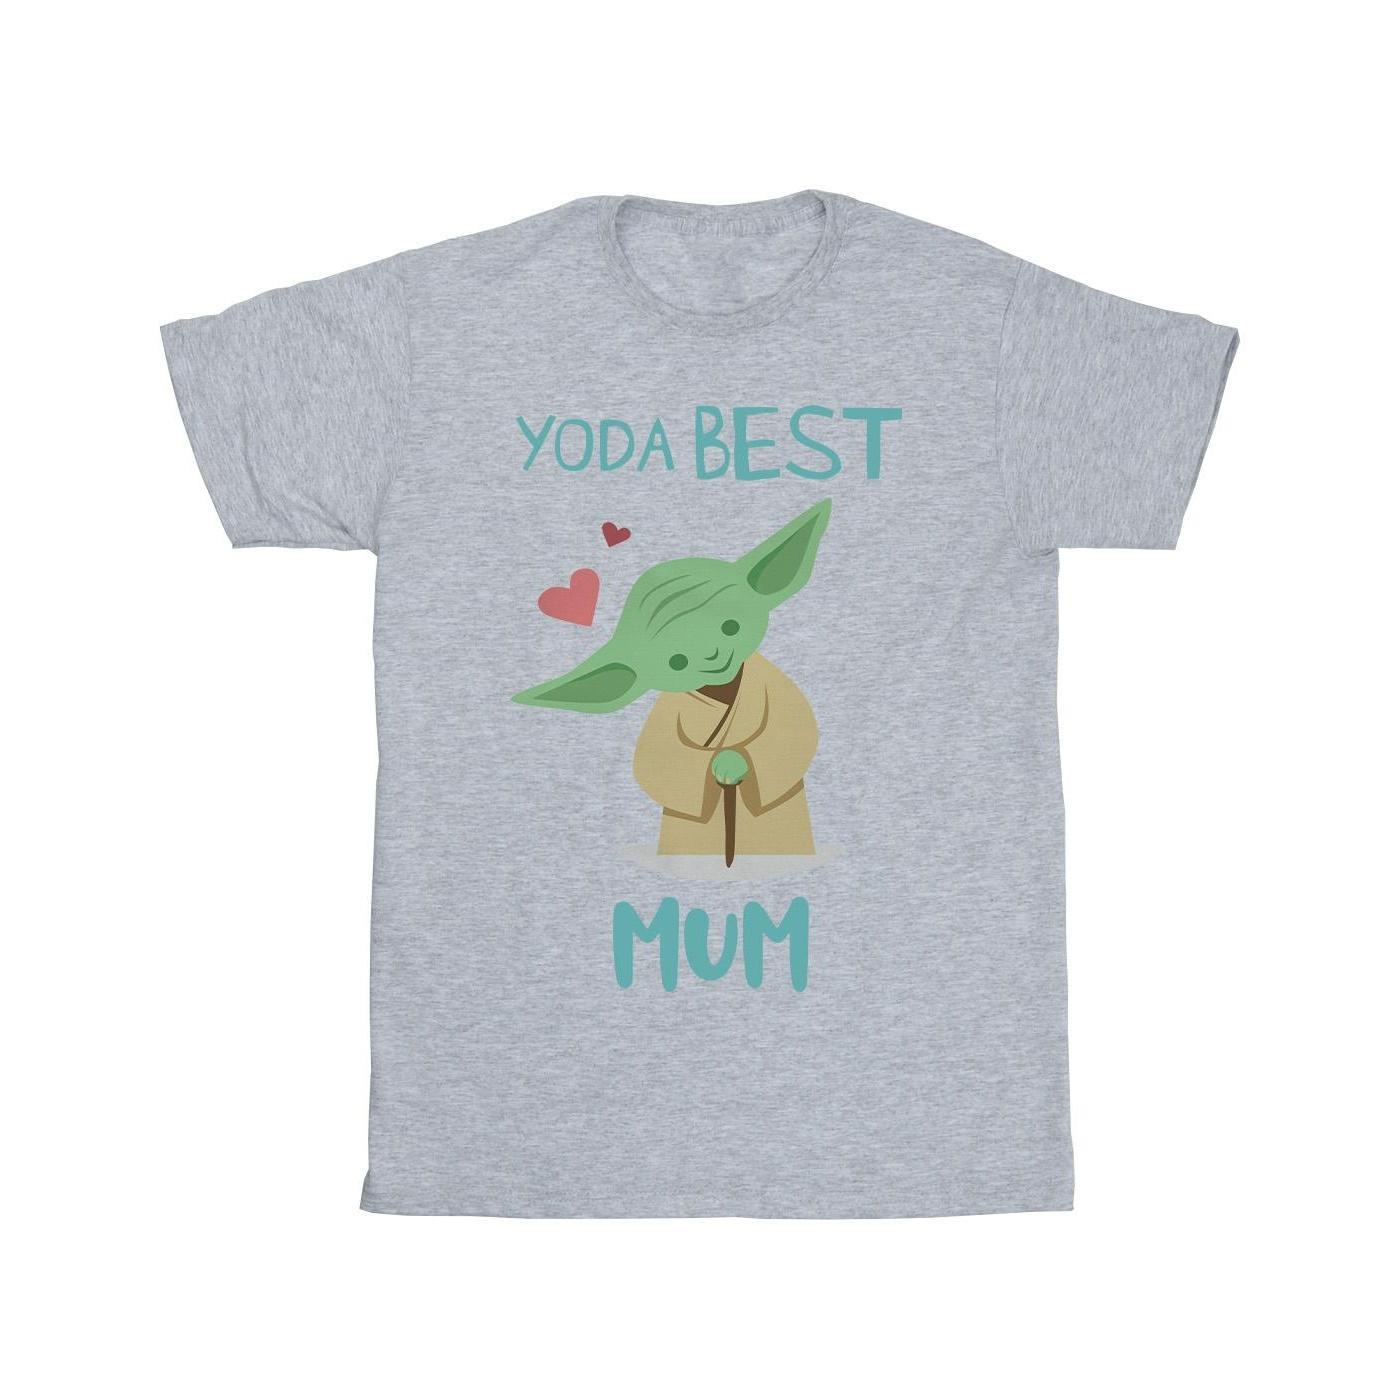 Star Wars Boys Yoda Best Mum T-Shirt (Sports Grey) (12-13 Years)